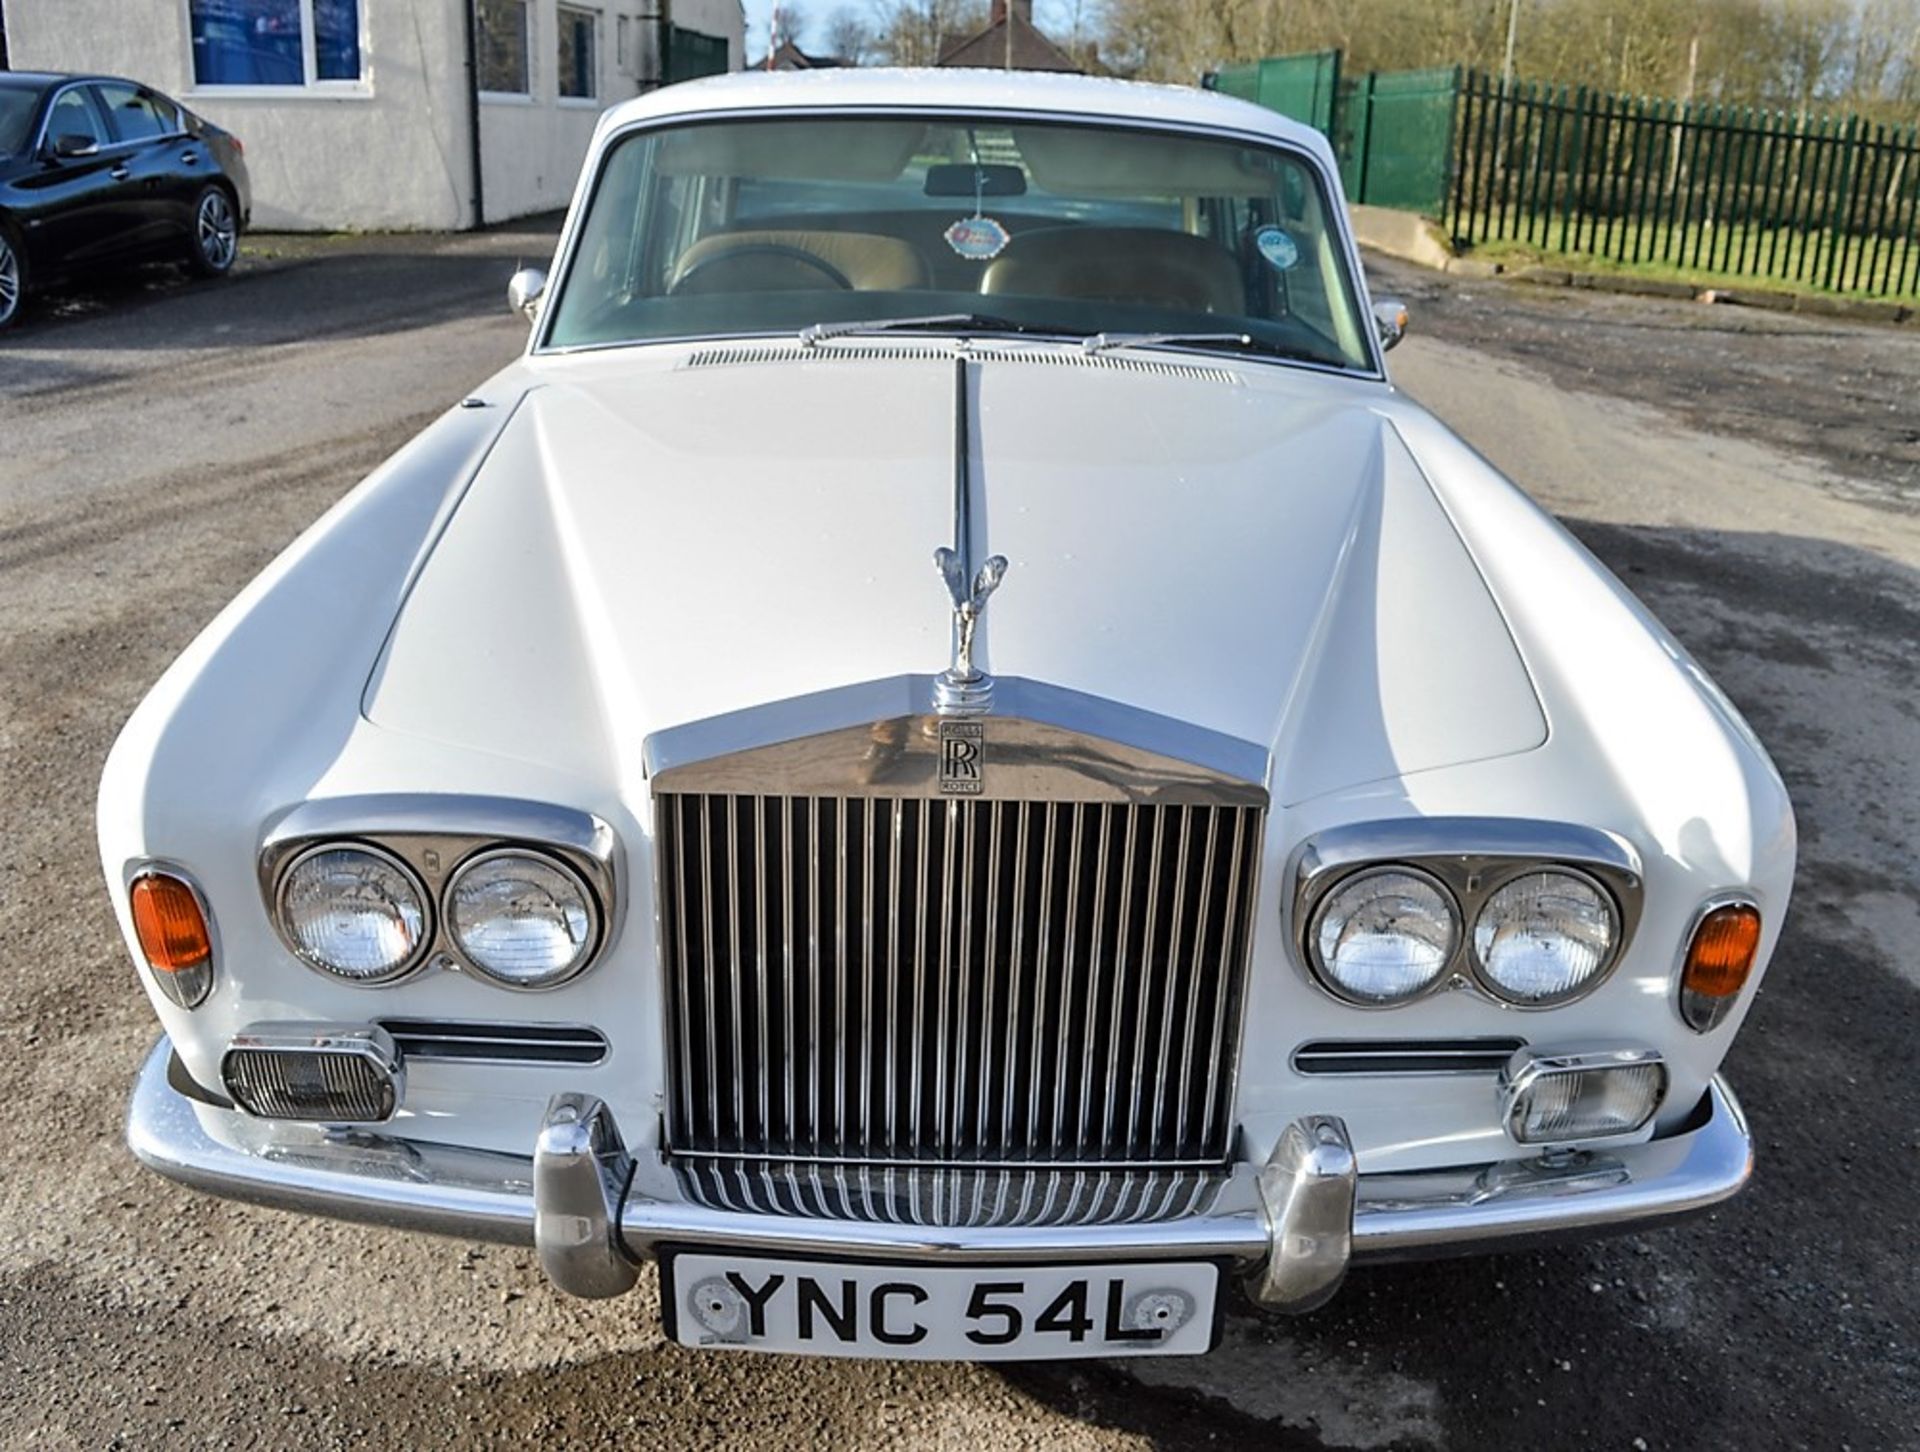 Rolls Royce Silver Shadow 4 door saloon car Registration Number: YNC 54L  Date of Registration: - Image 3 of 12